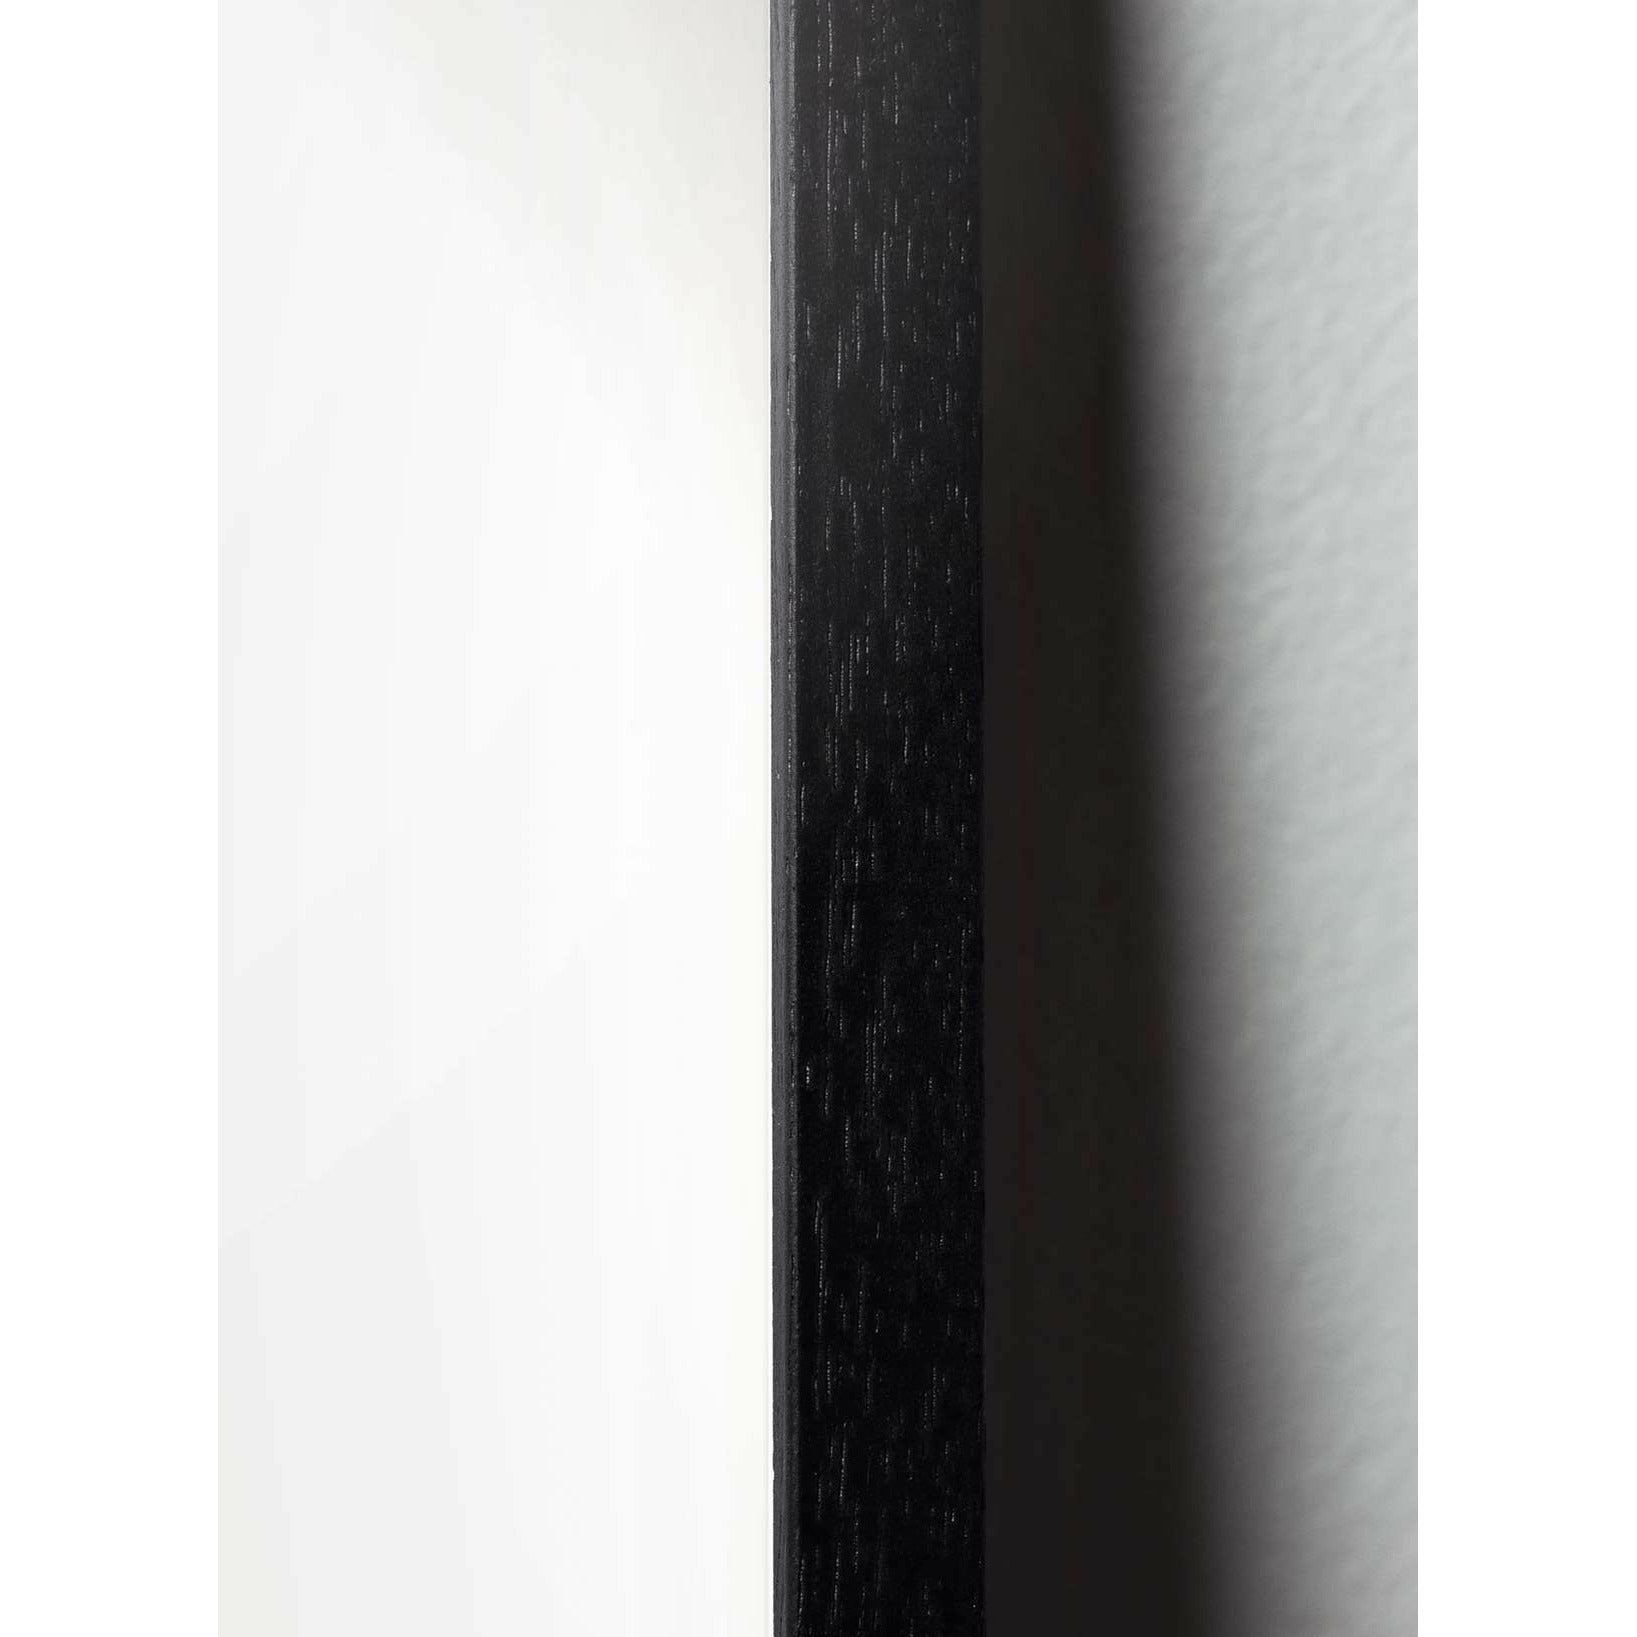 Brainchild Myrklassisk affisch, ram i svart -målat trä 30x40 cm, sandfärgad bakgrund